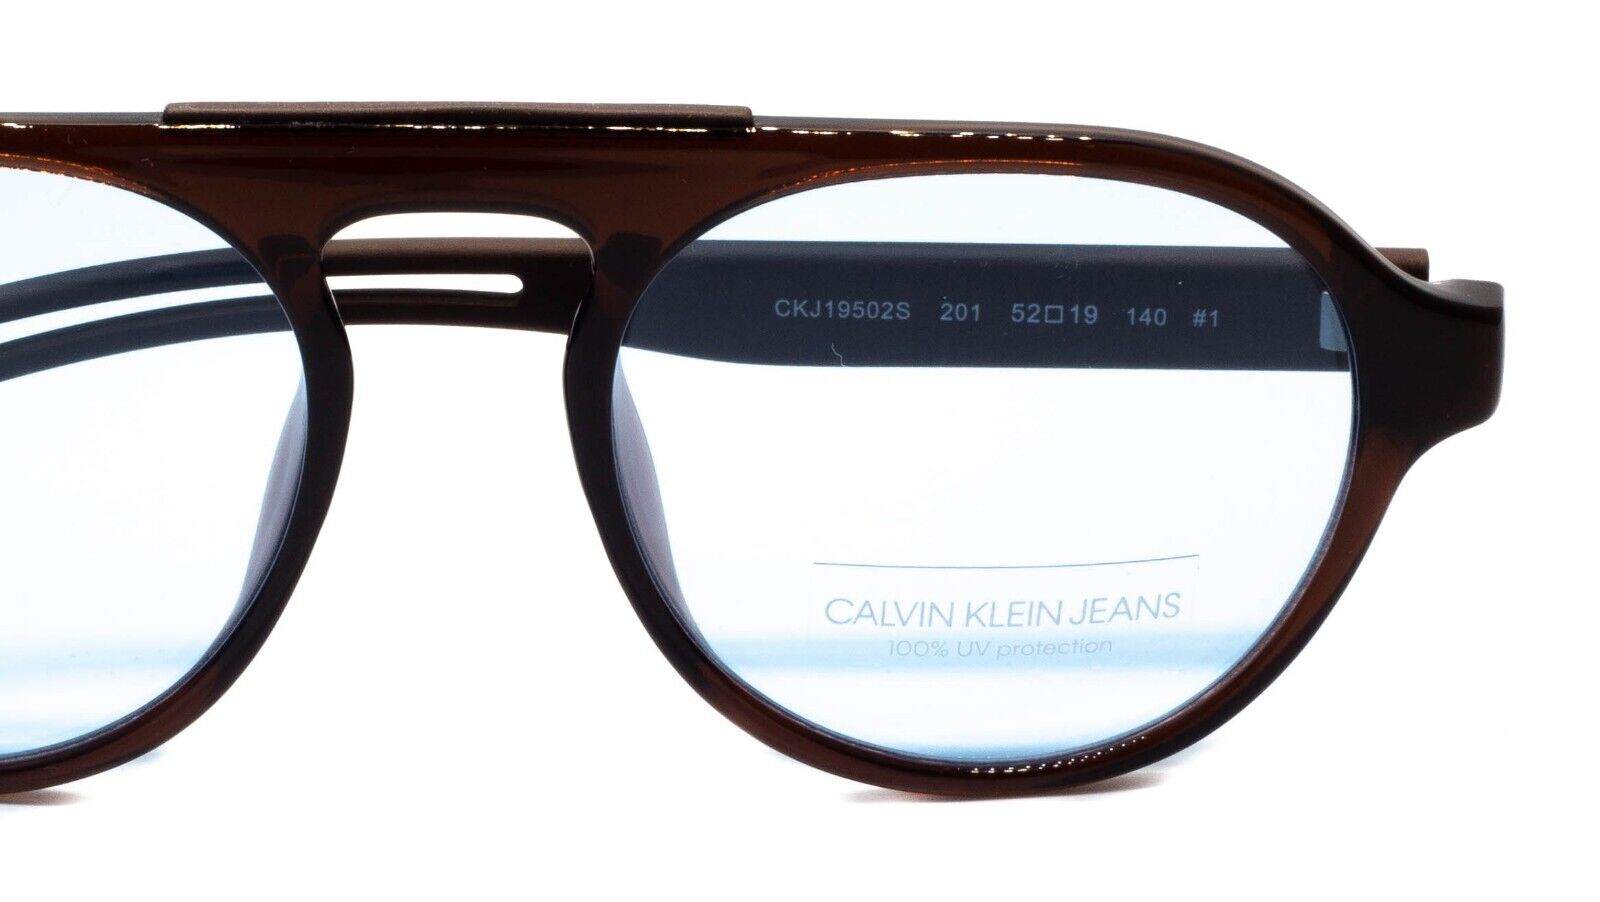 CALVIN KLEIN JEANS CKJ - Eyewear Frames Eyewear Shades New 19502S - GGV Sunglasses #1 201 52mm